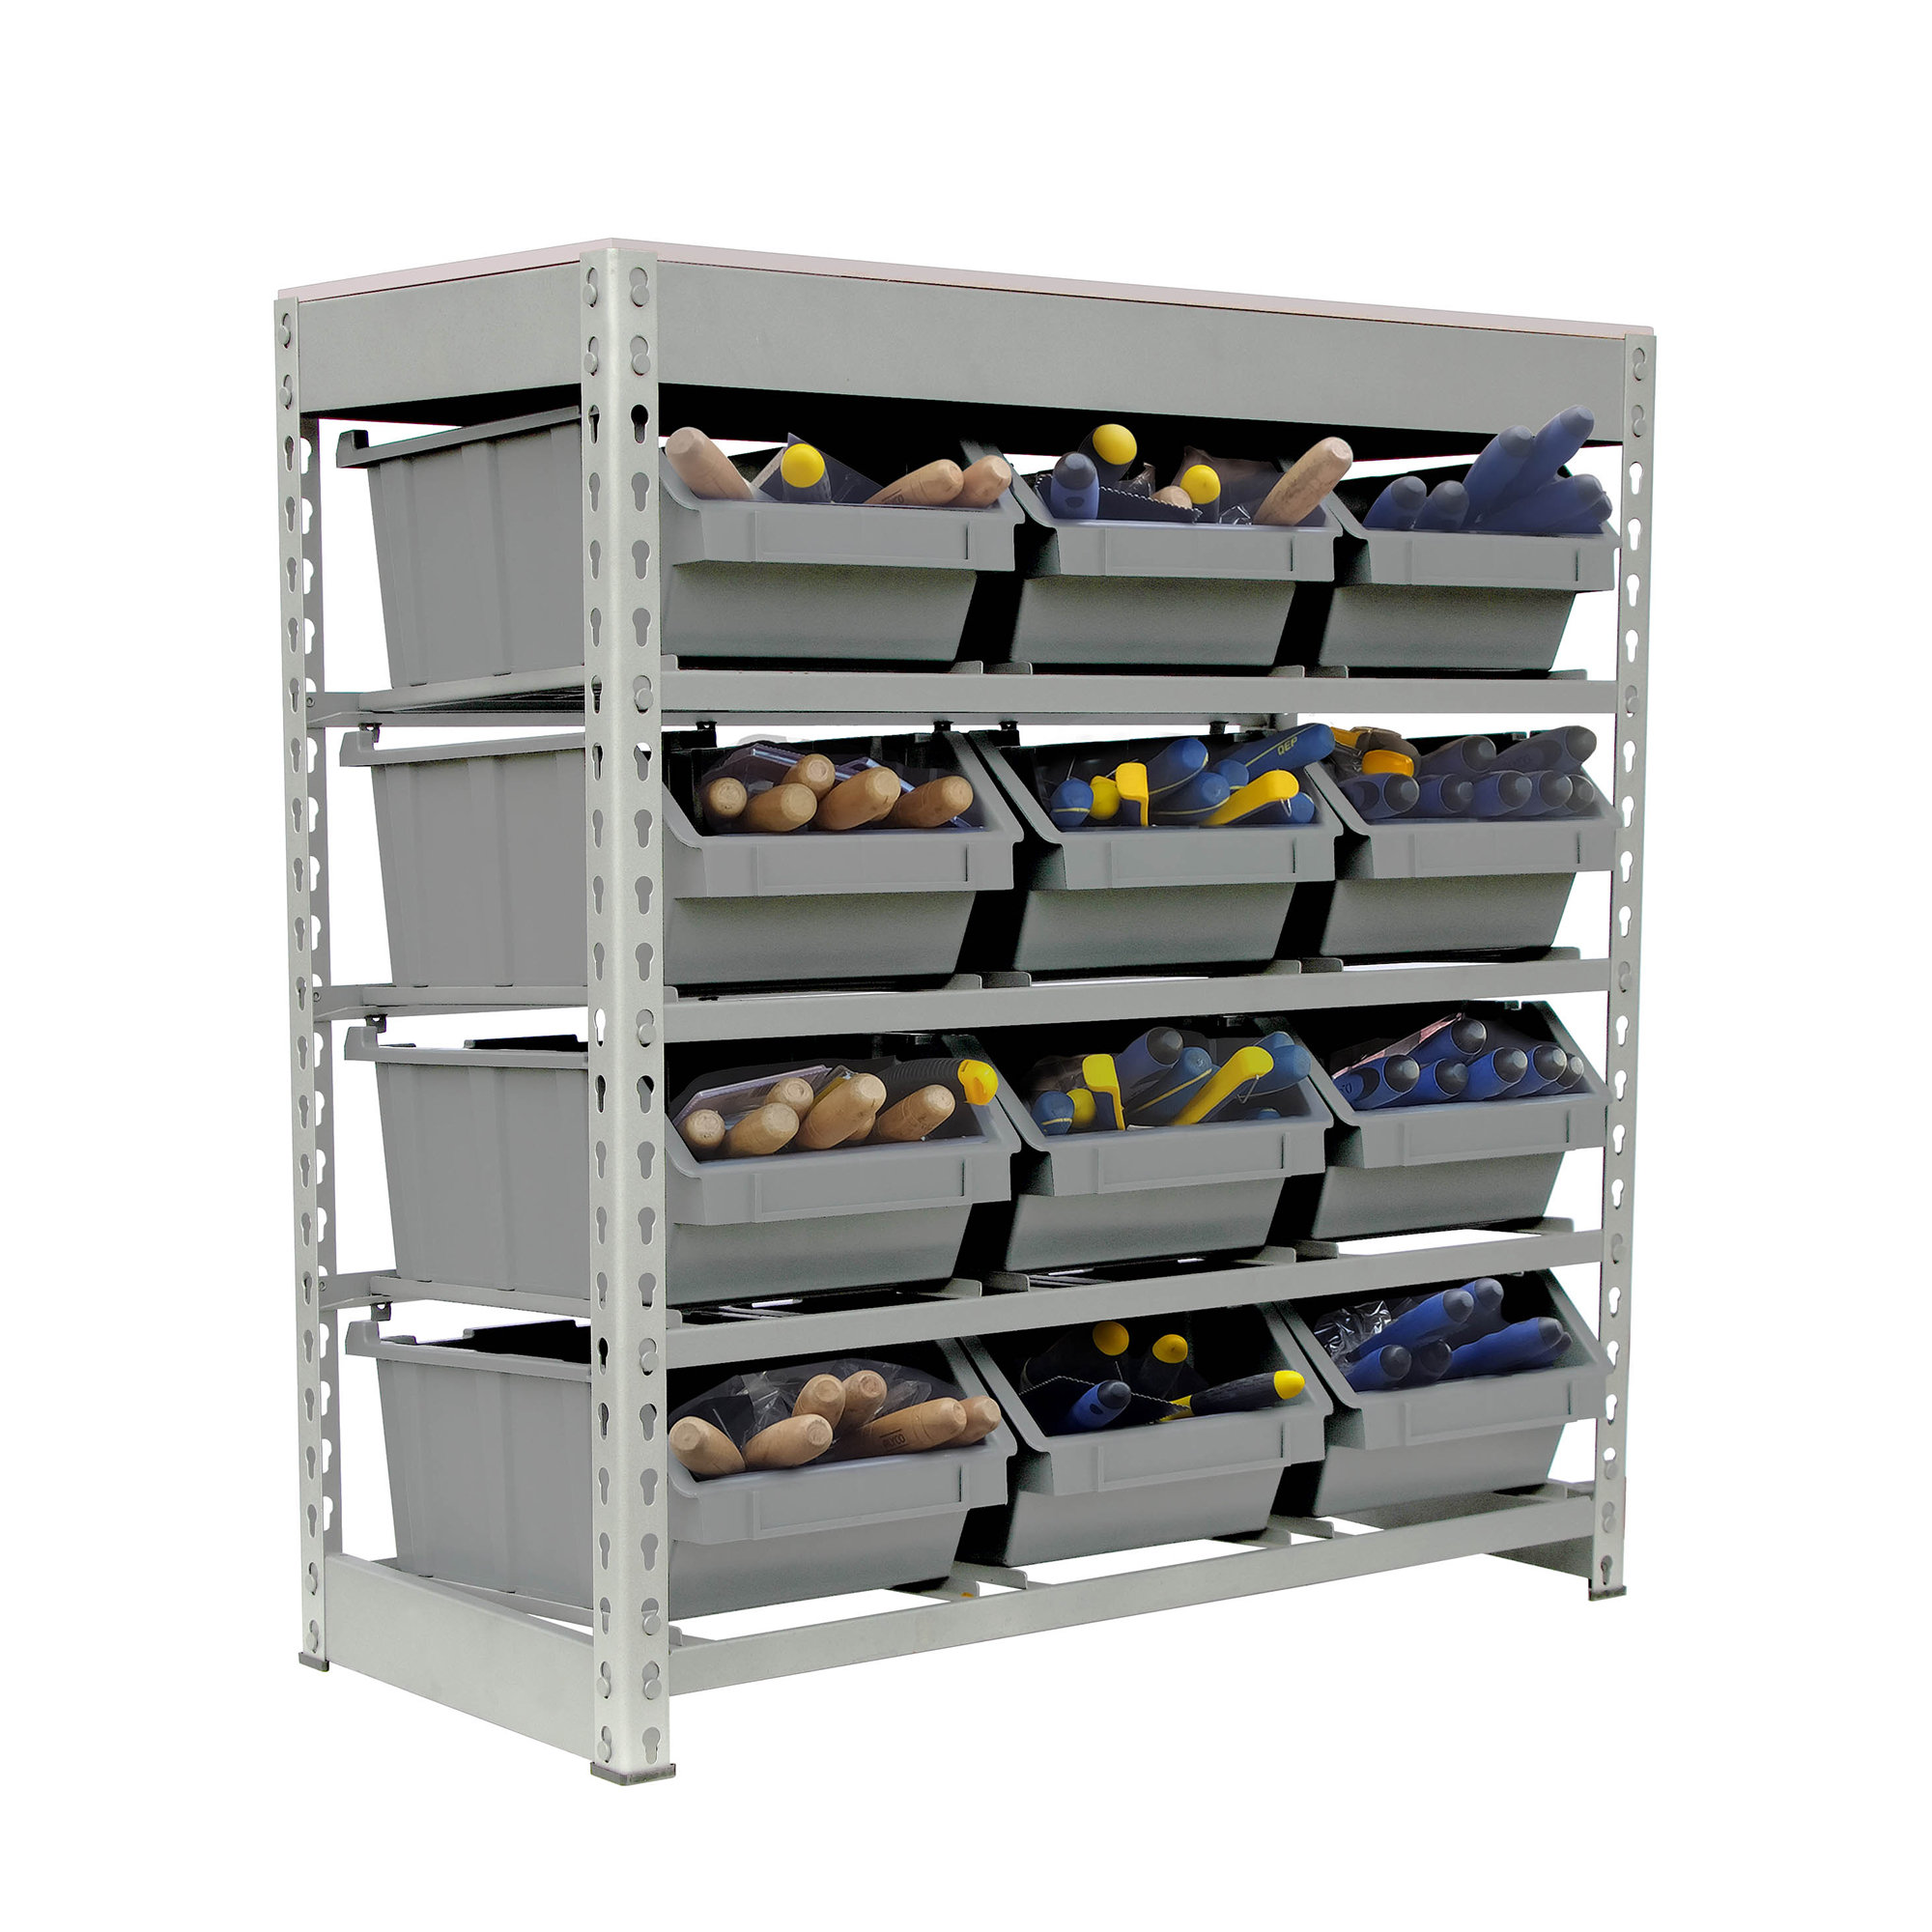  King's Rack Hanging Bin Rack Storage System Heavy Duty Steel Rack  Organizer Shelving Unit w/ 35 Plastic Bins in 8 tiers : Tools & Home  Improvement